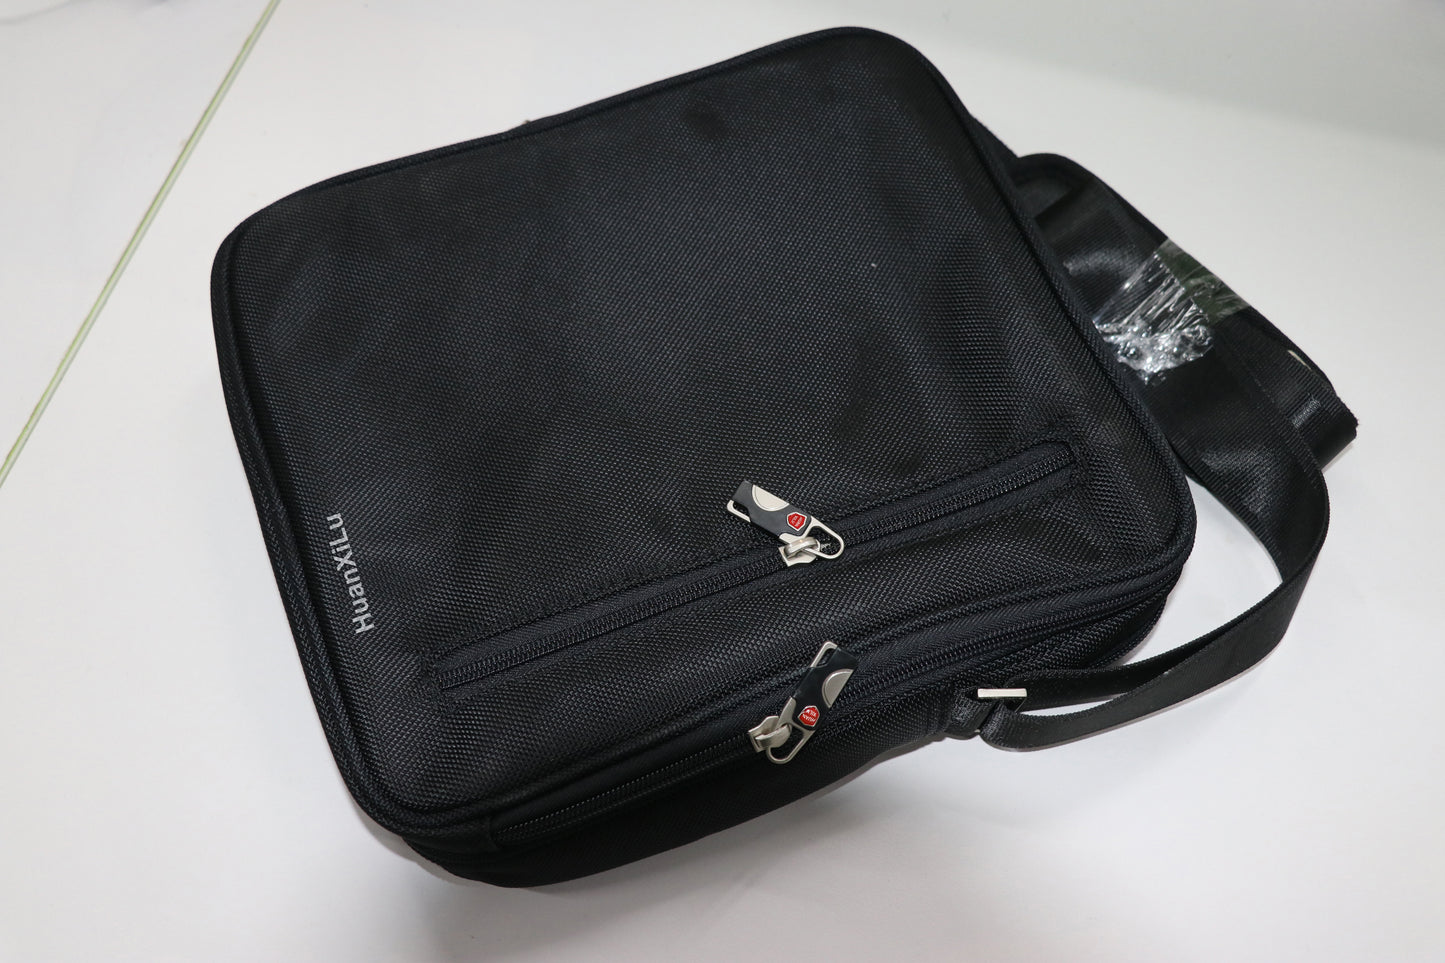 HuanXiLu Laptop Backpack, Business Travel Anti Theft Slim Durable Bag